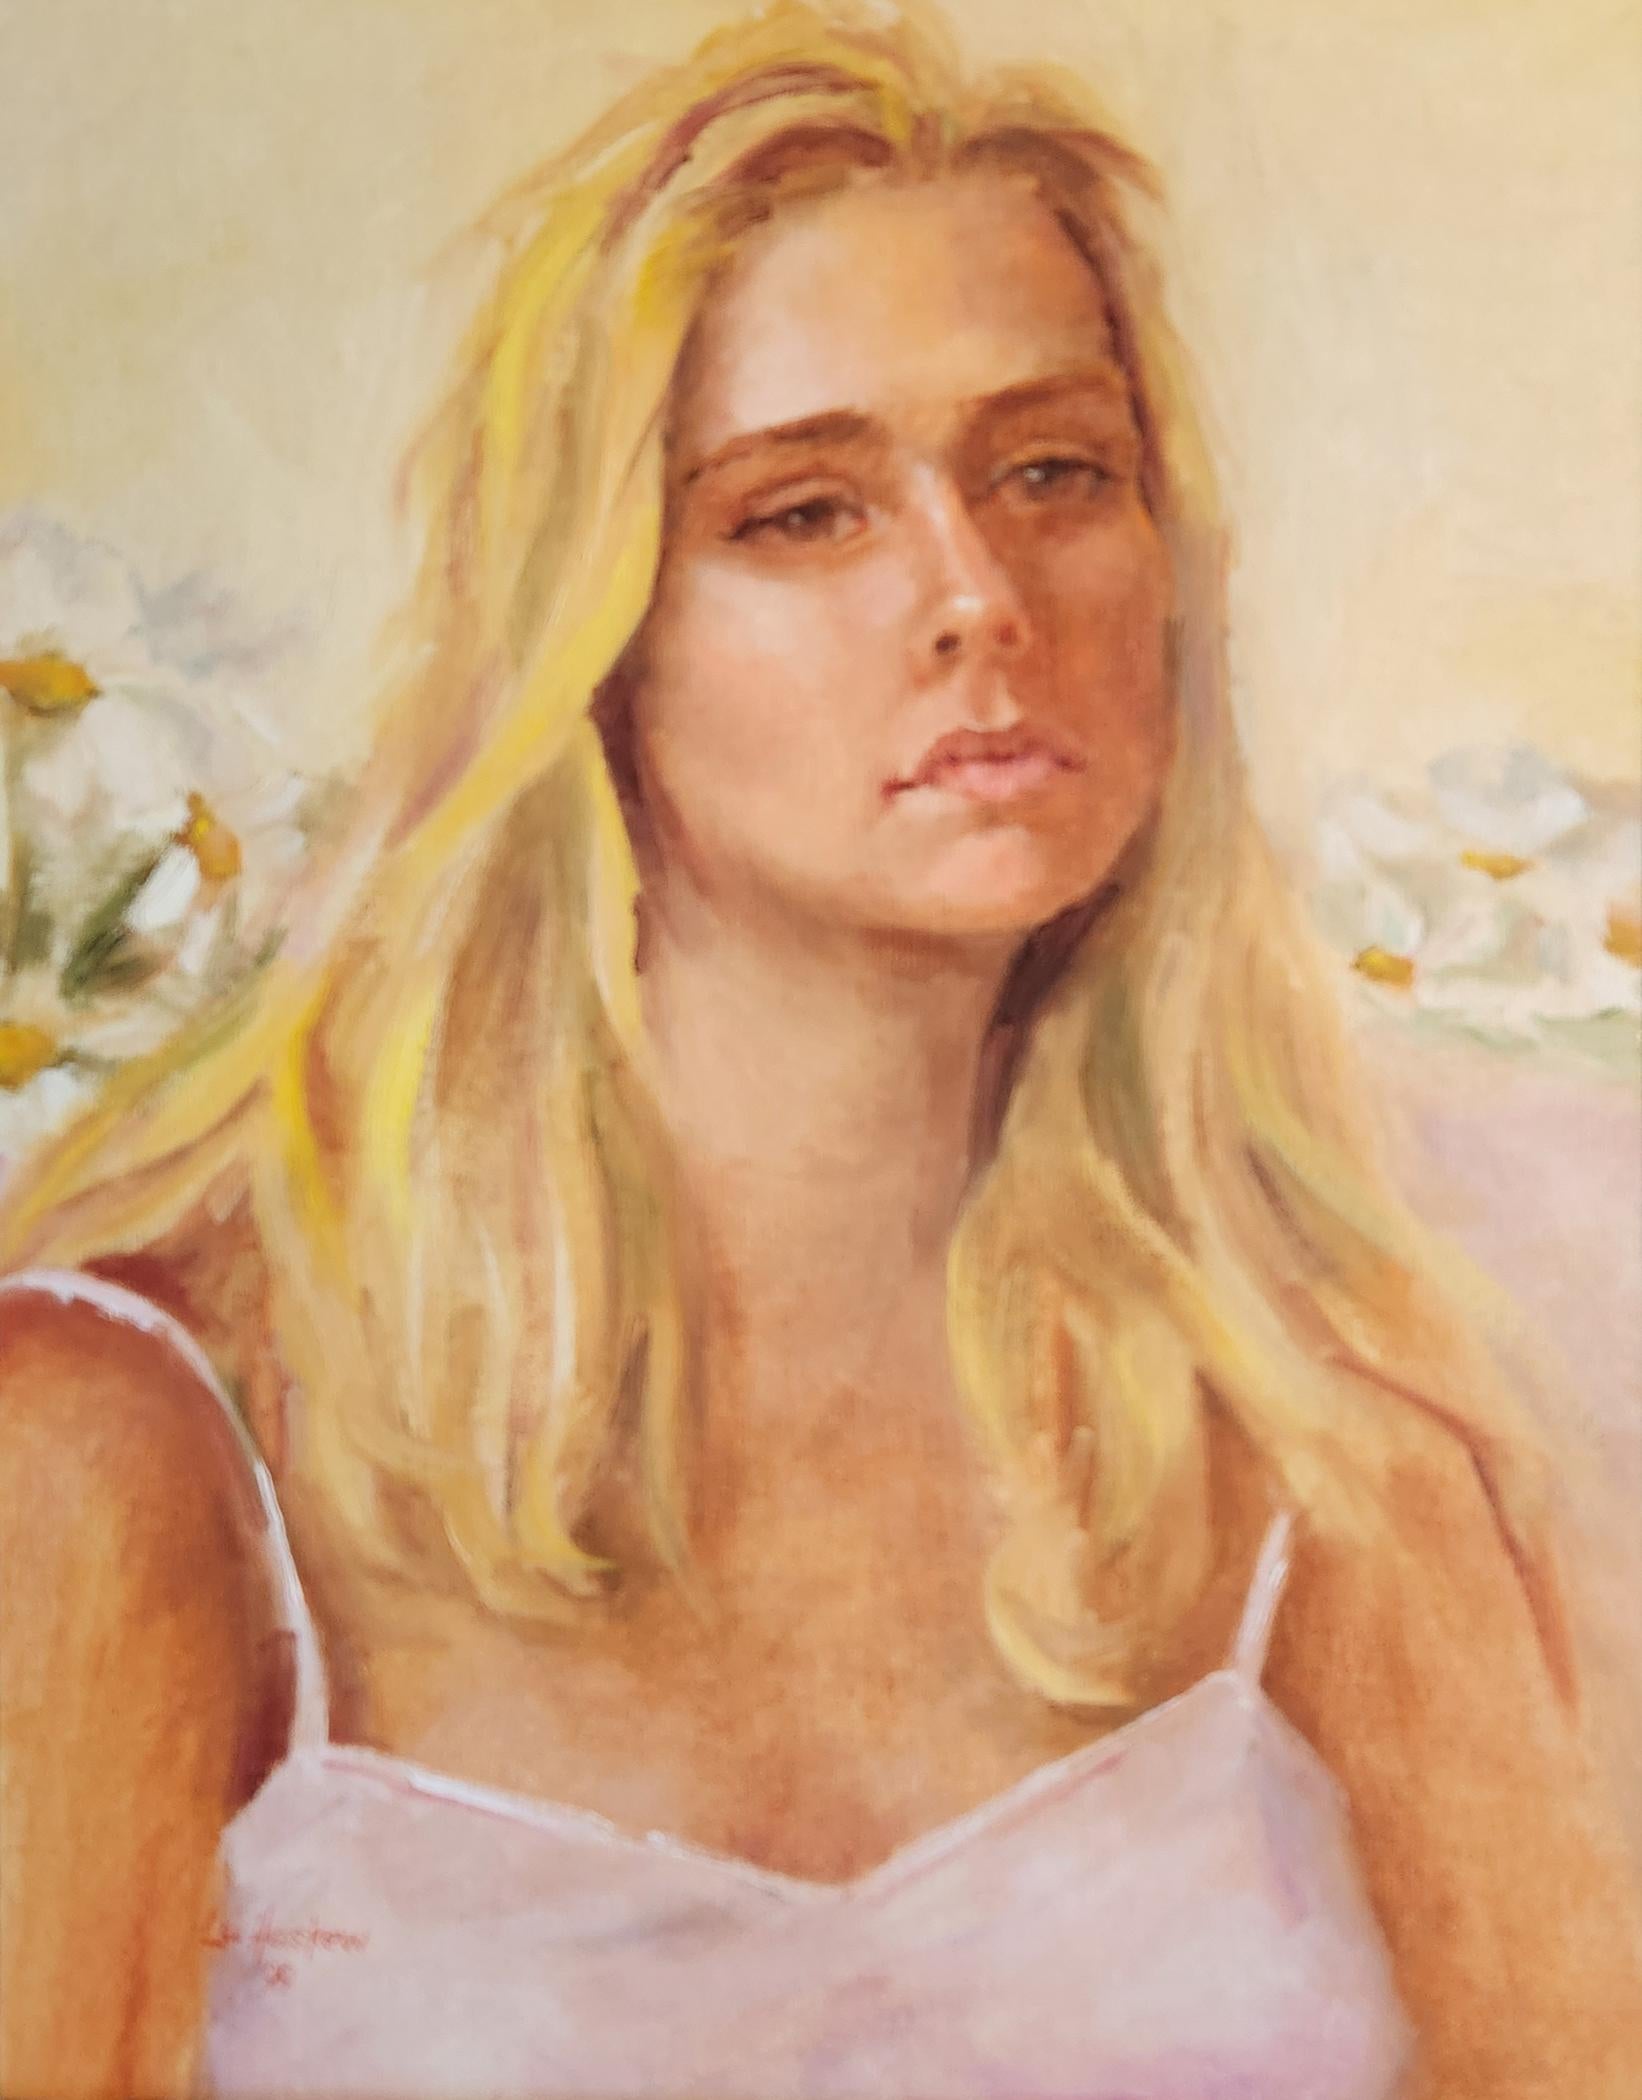 Lu Haskew Portrait Painting - The Blonde Neighbor, 16x12" oil on board